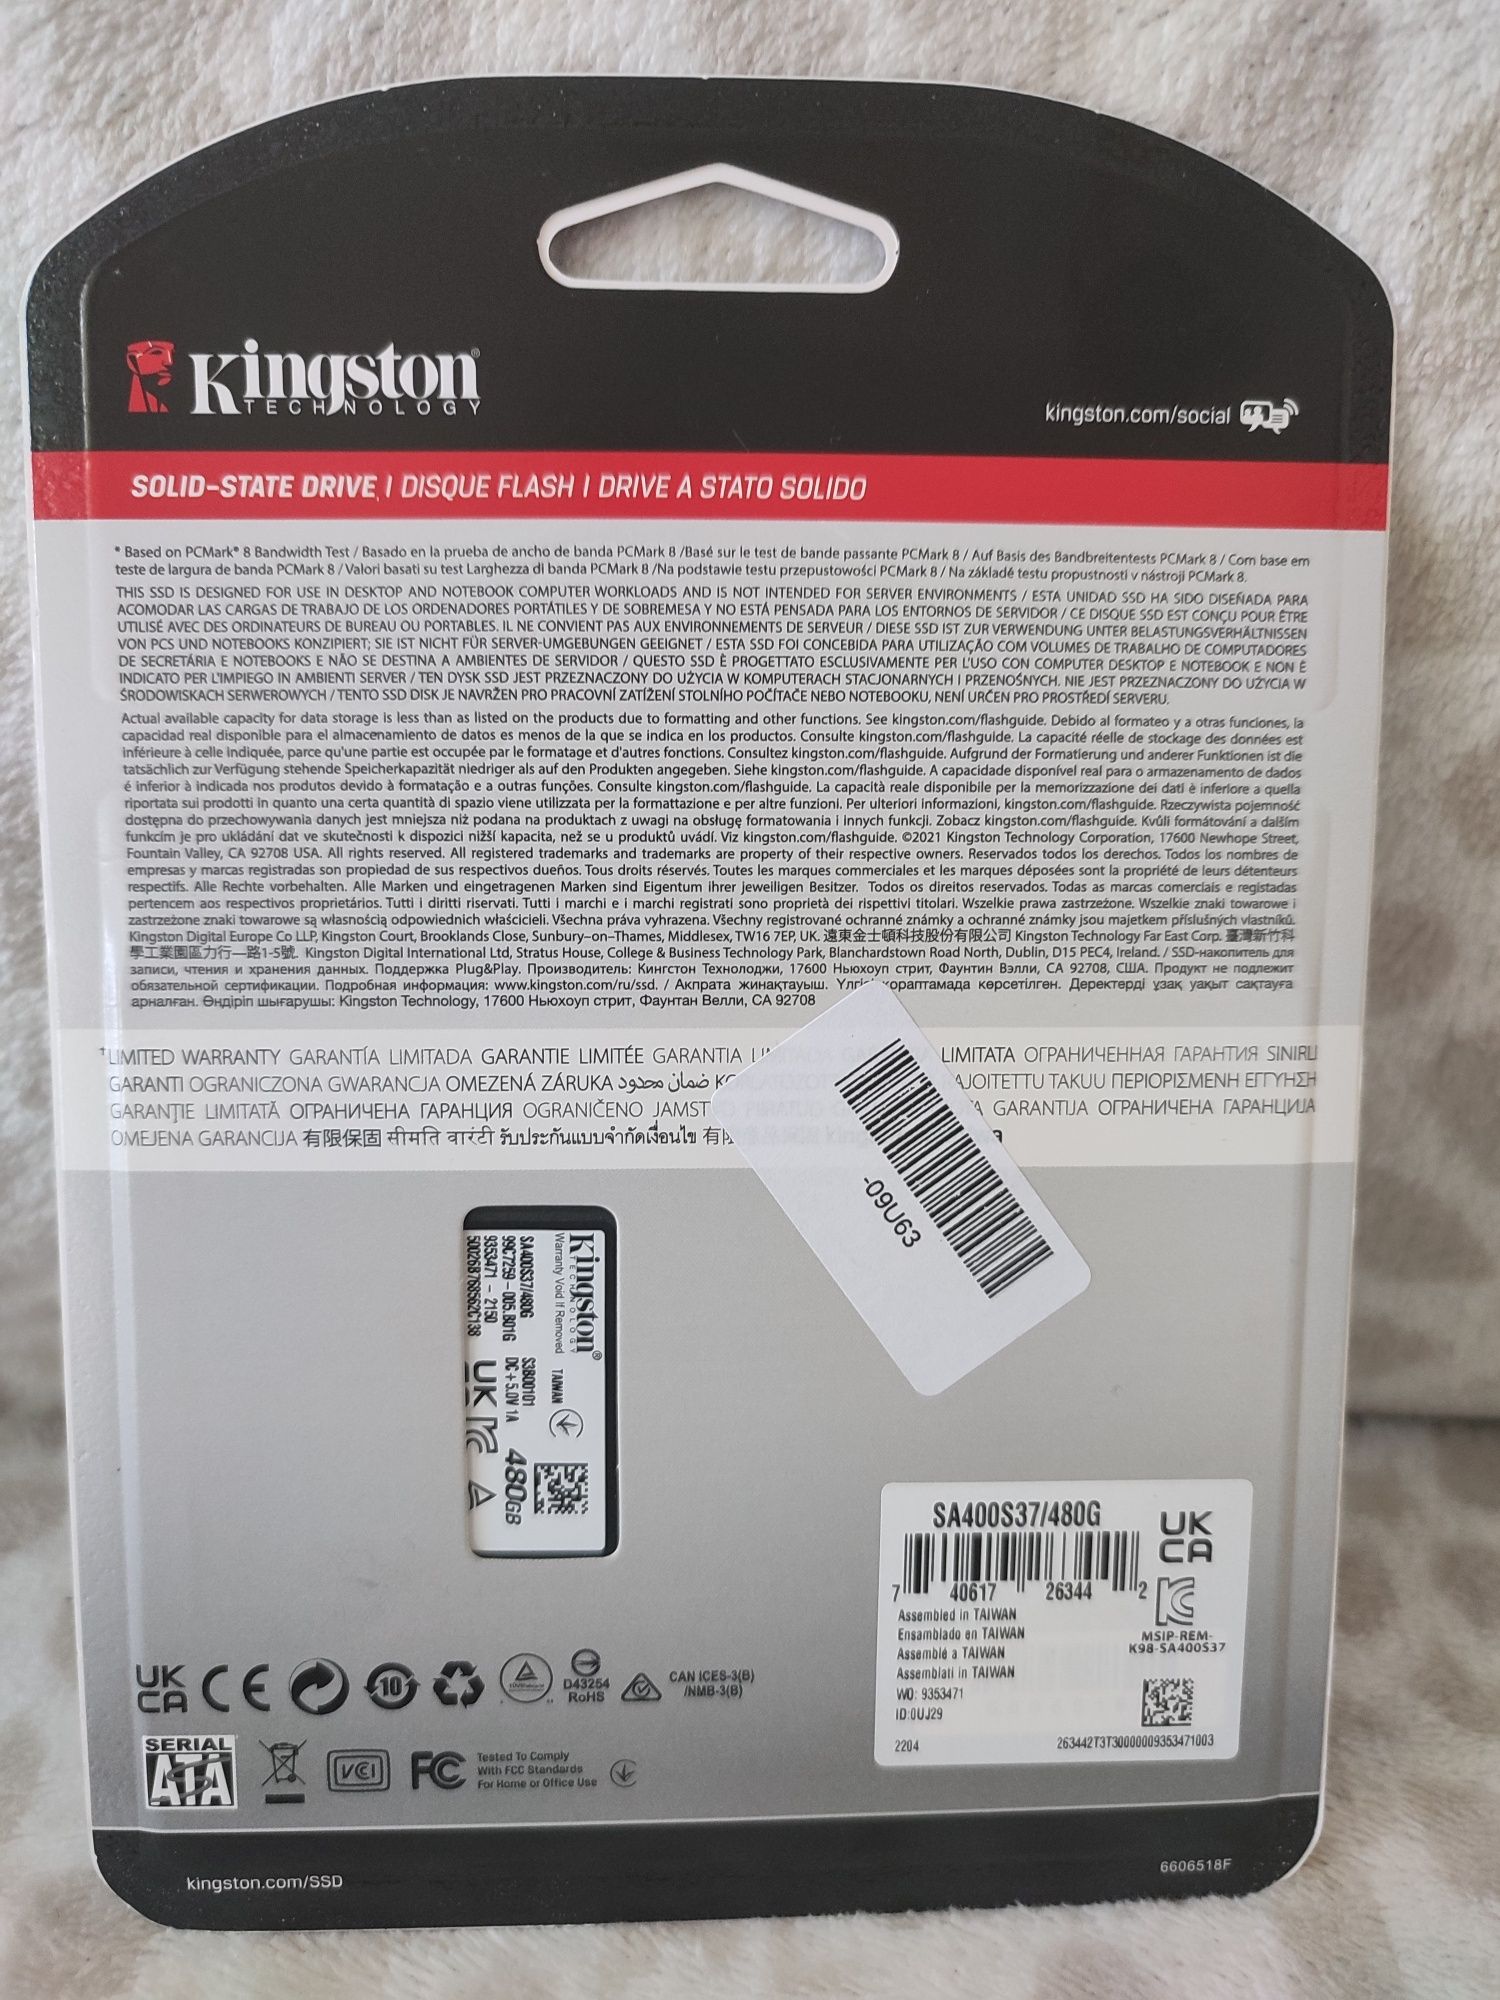 SSD Kingston 480 GB,A400